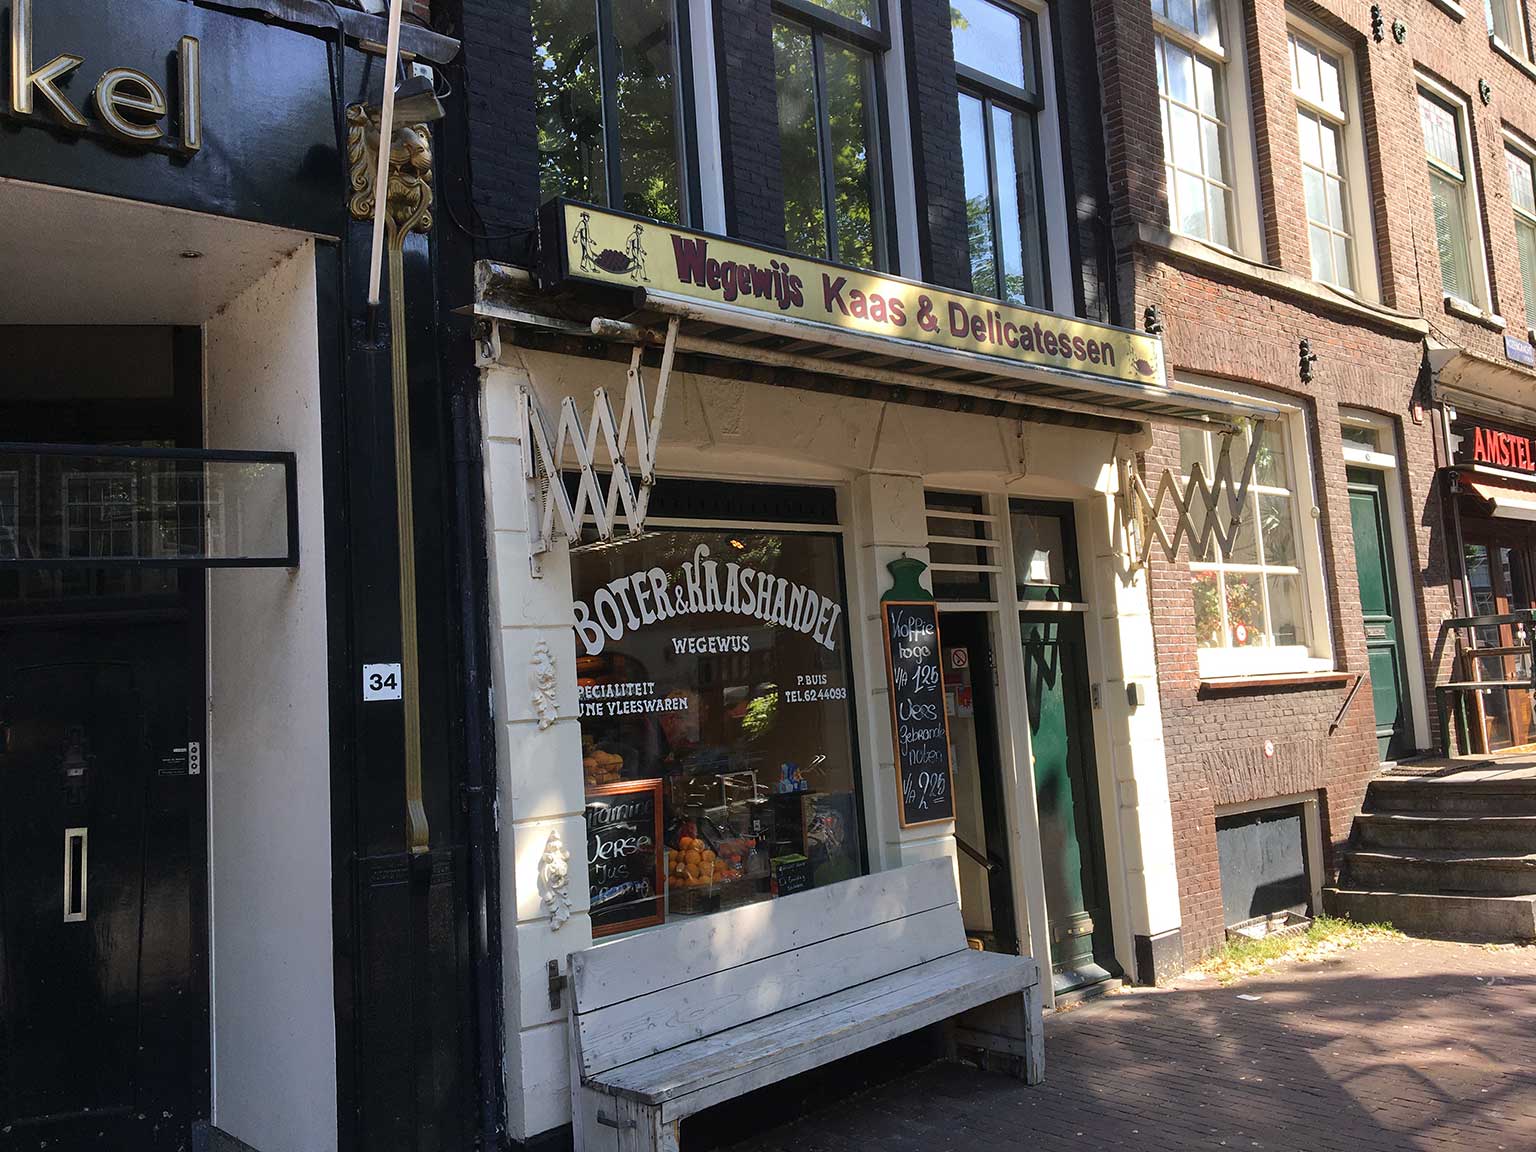 Traditional cheese shop Wegewijs at Rozengracht 32, Amsterdam